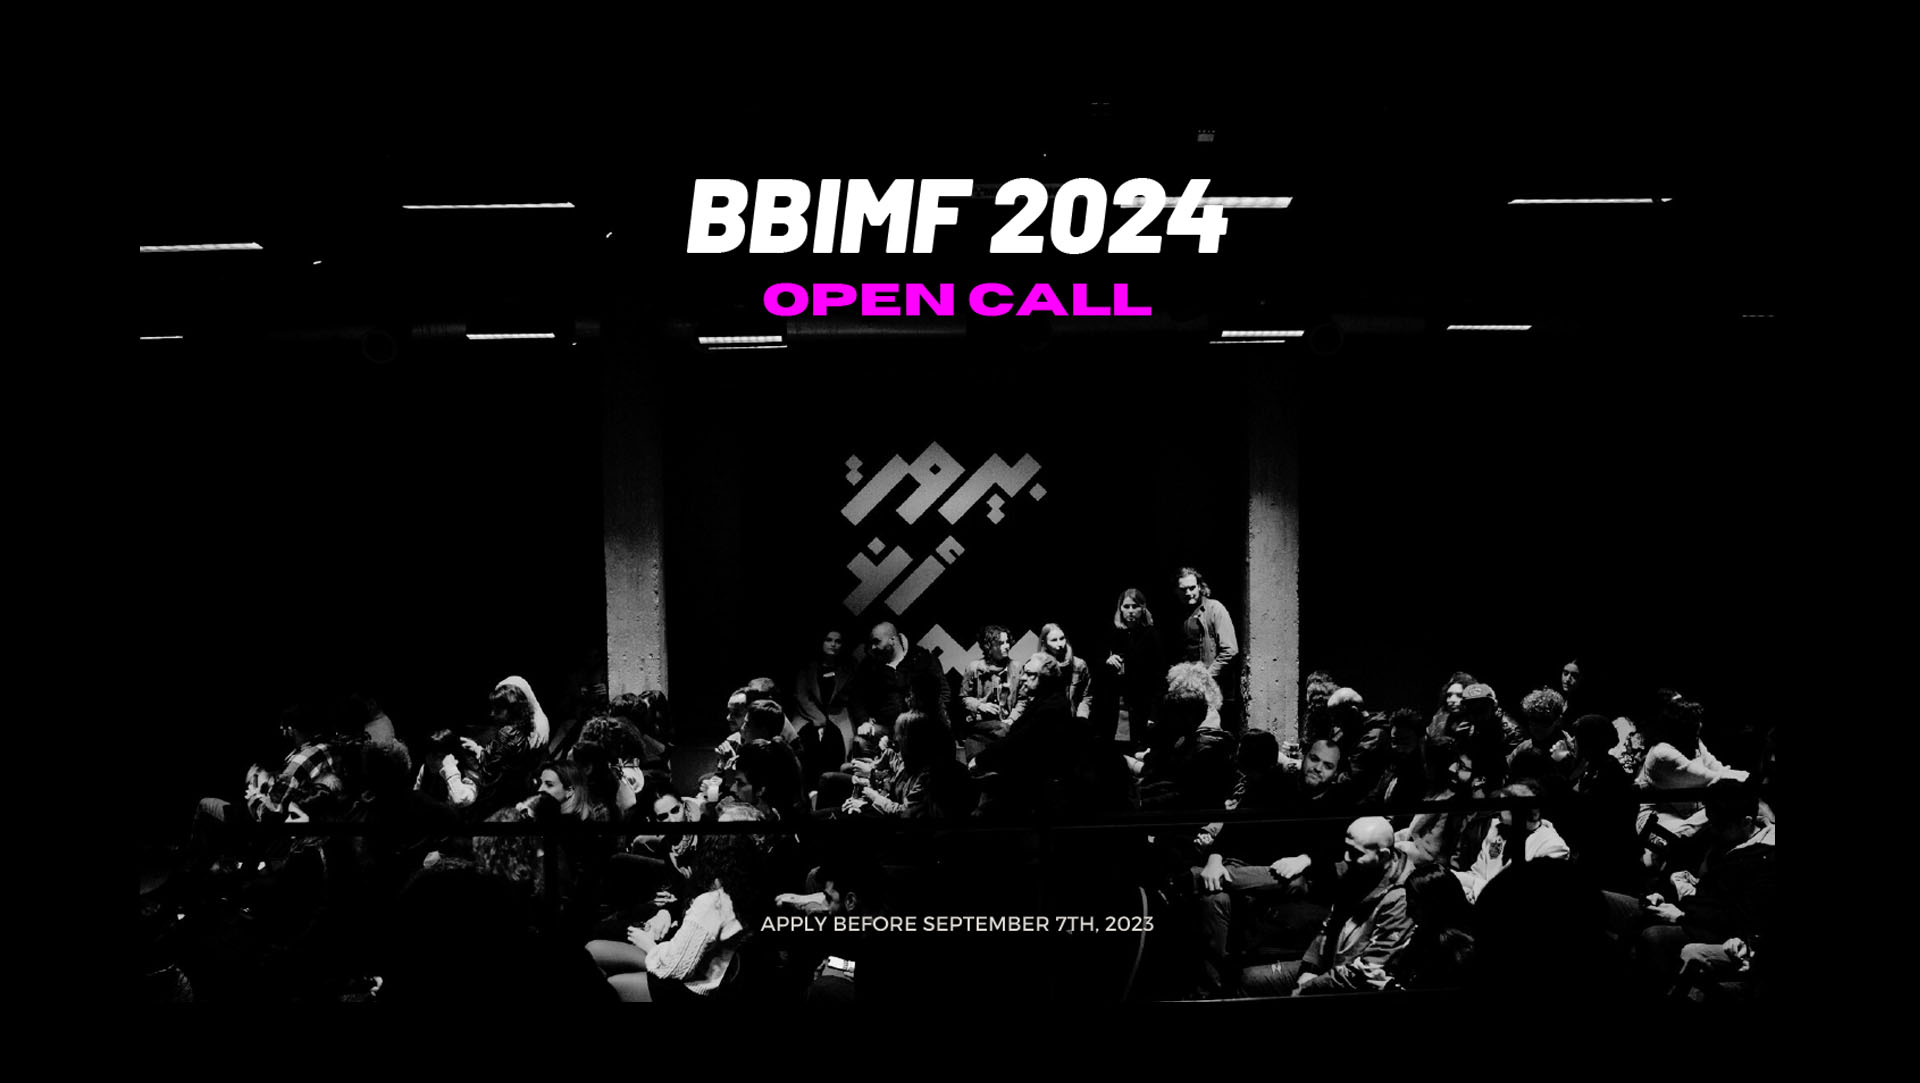 Open call: BBIMF 2024